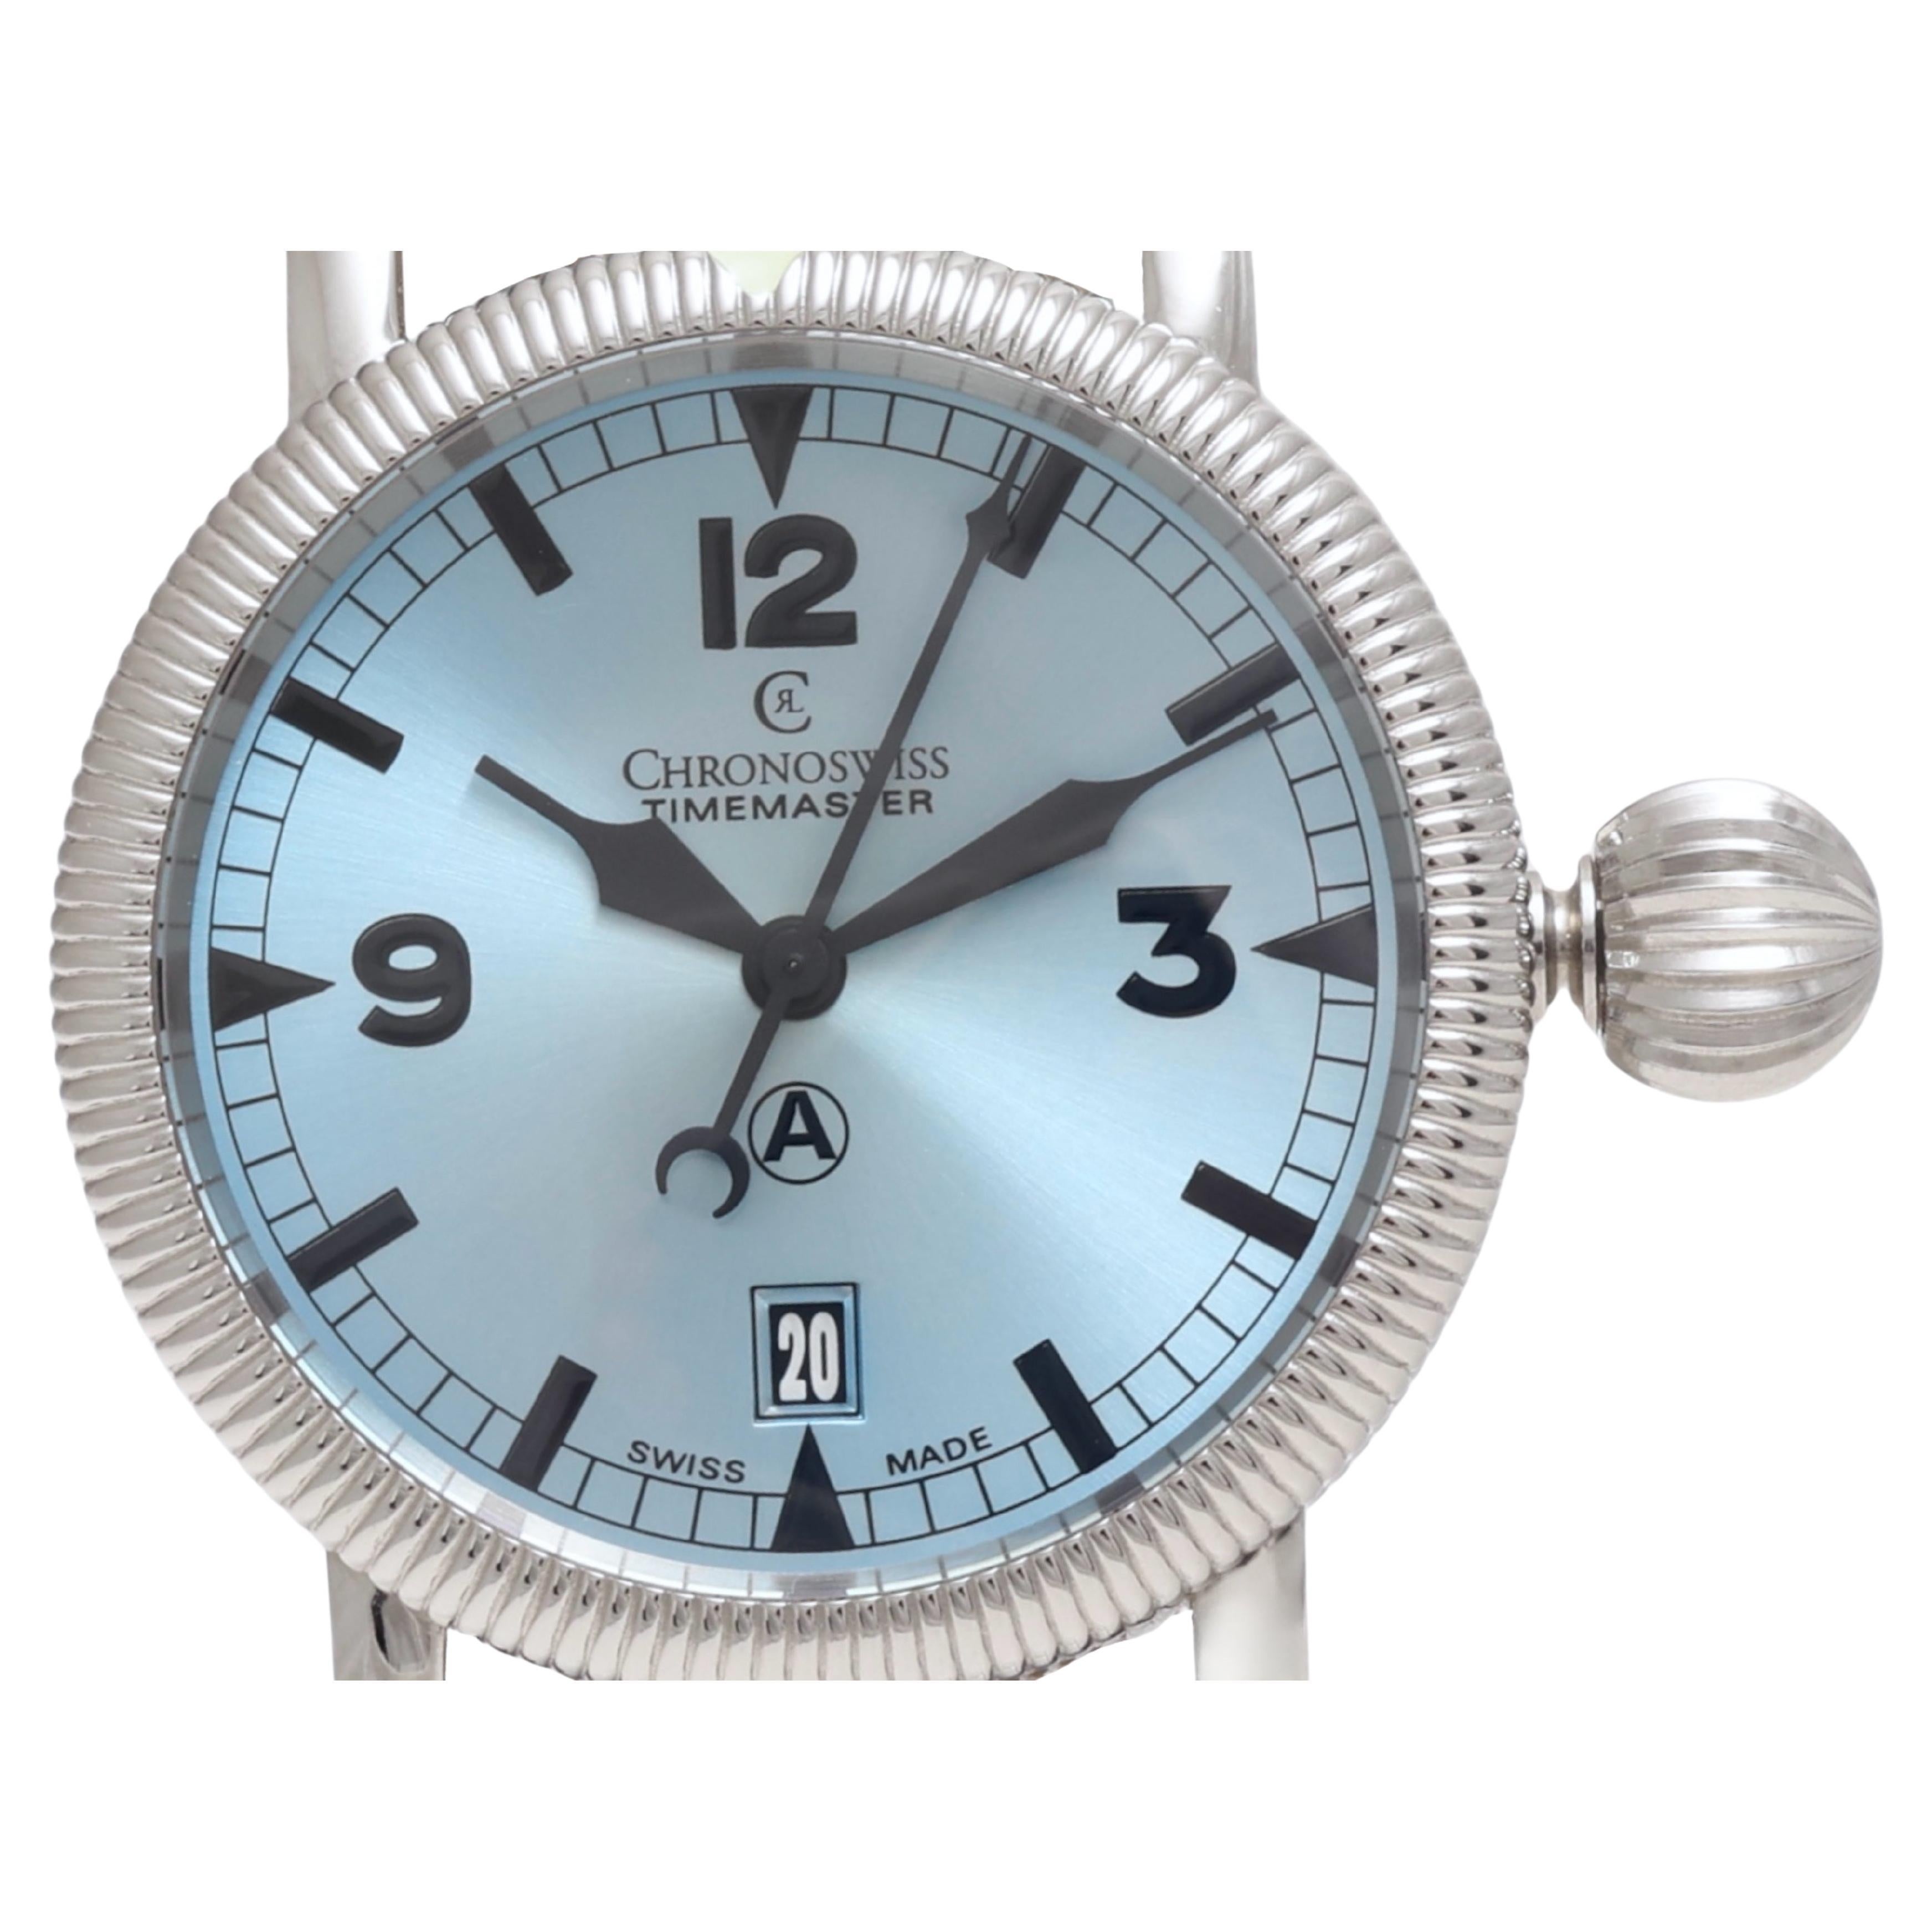 Steel Chronoswiss Timemaster Automatic Wrist Watch LNIB